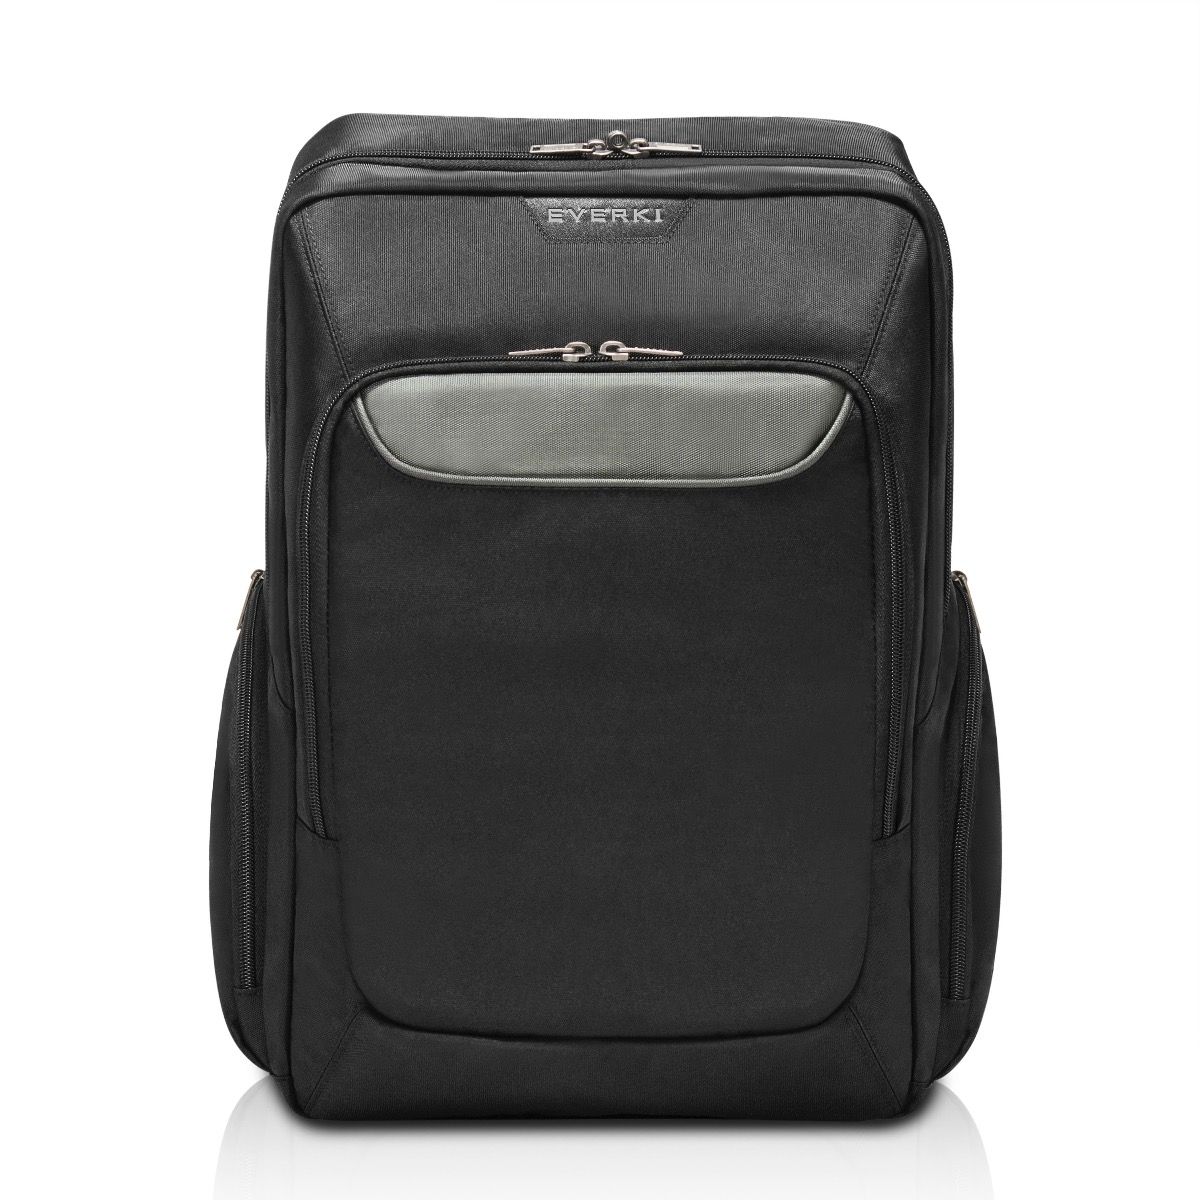 EVERKI Advance 15 Inch Laptop Backpack